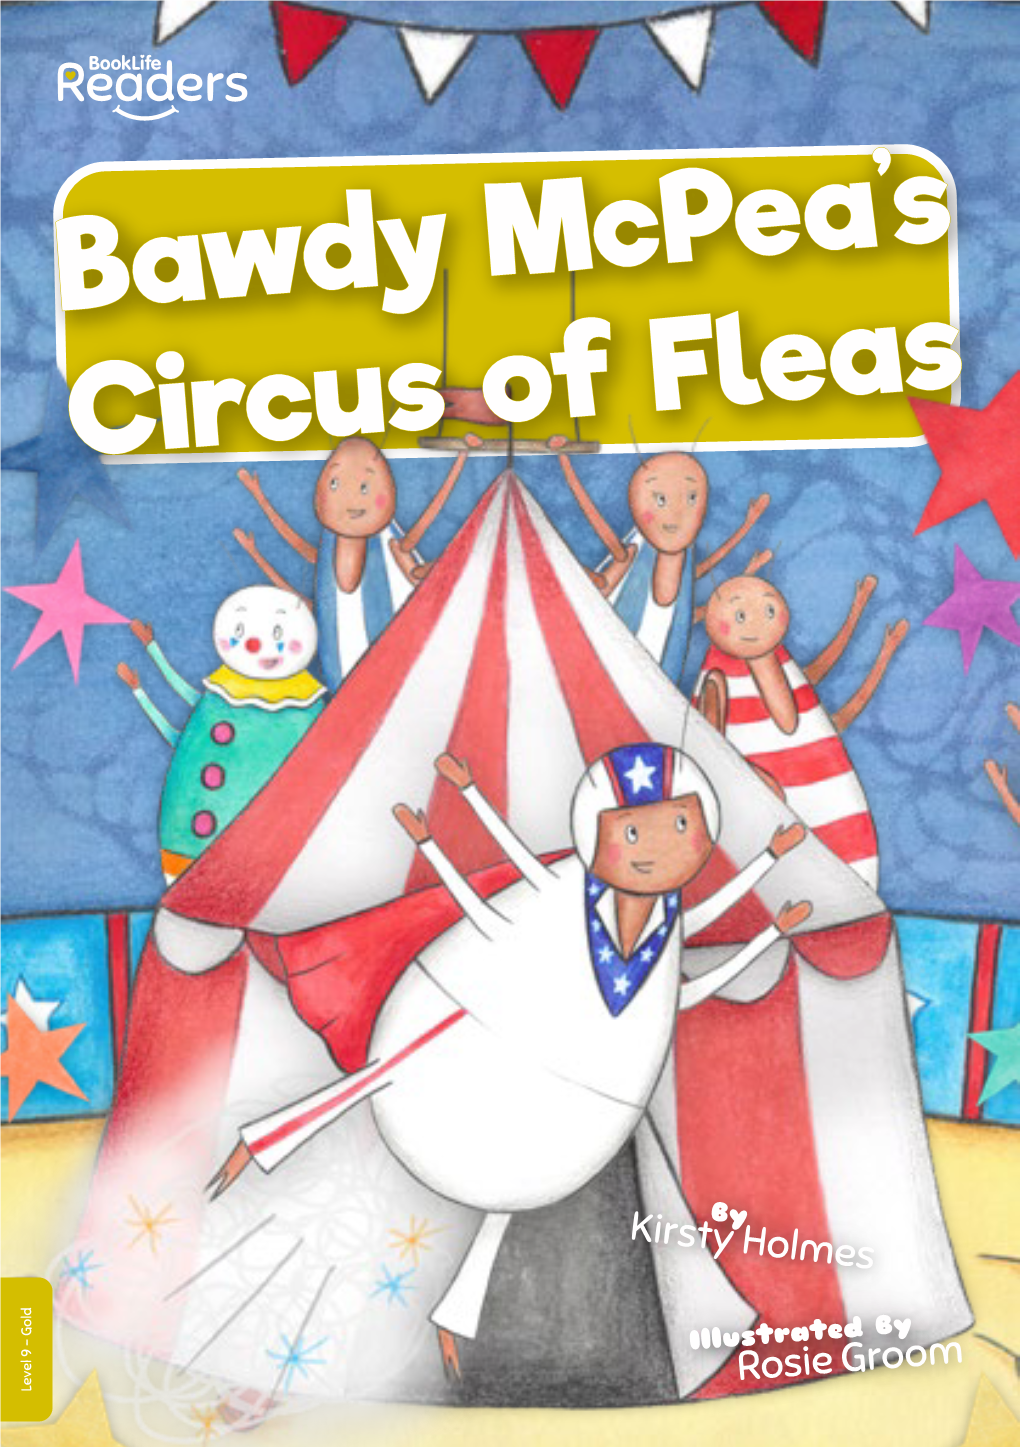 Bawdy Mcpea's Circus of Fleas